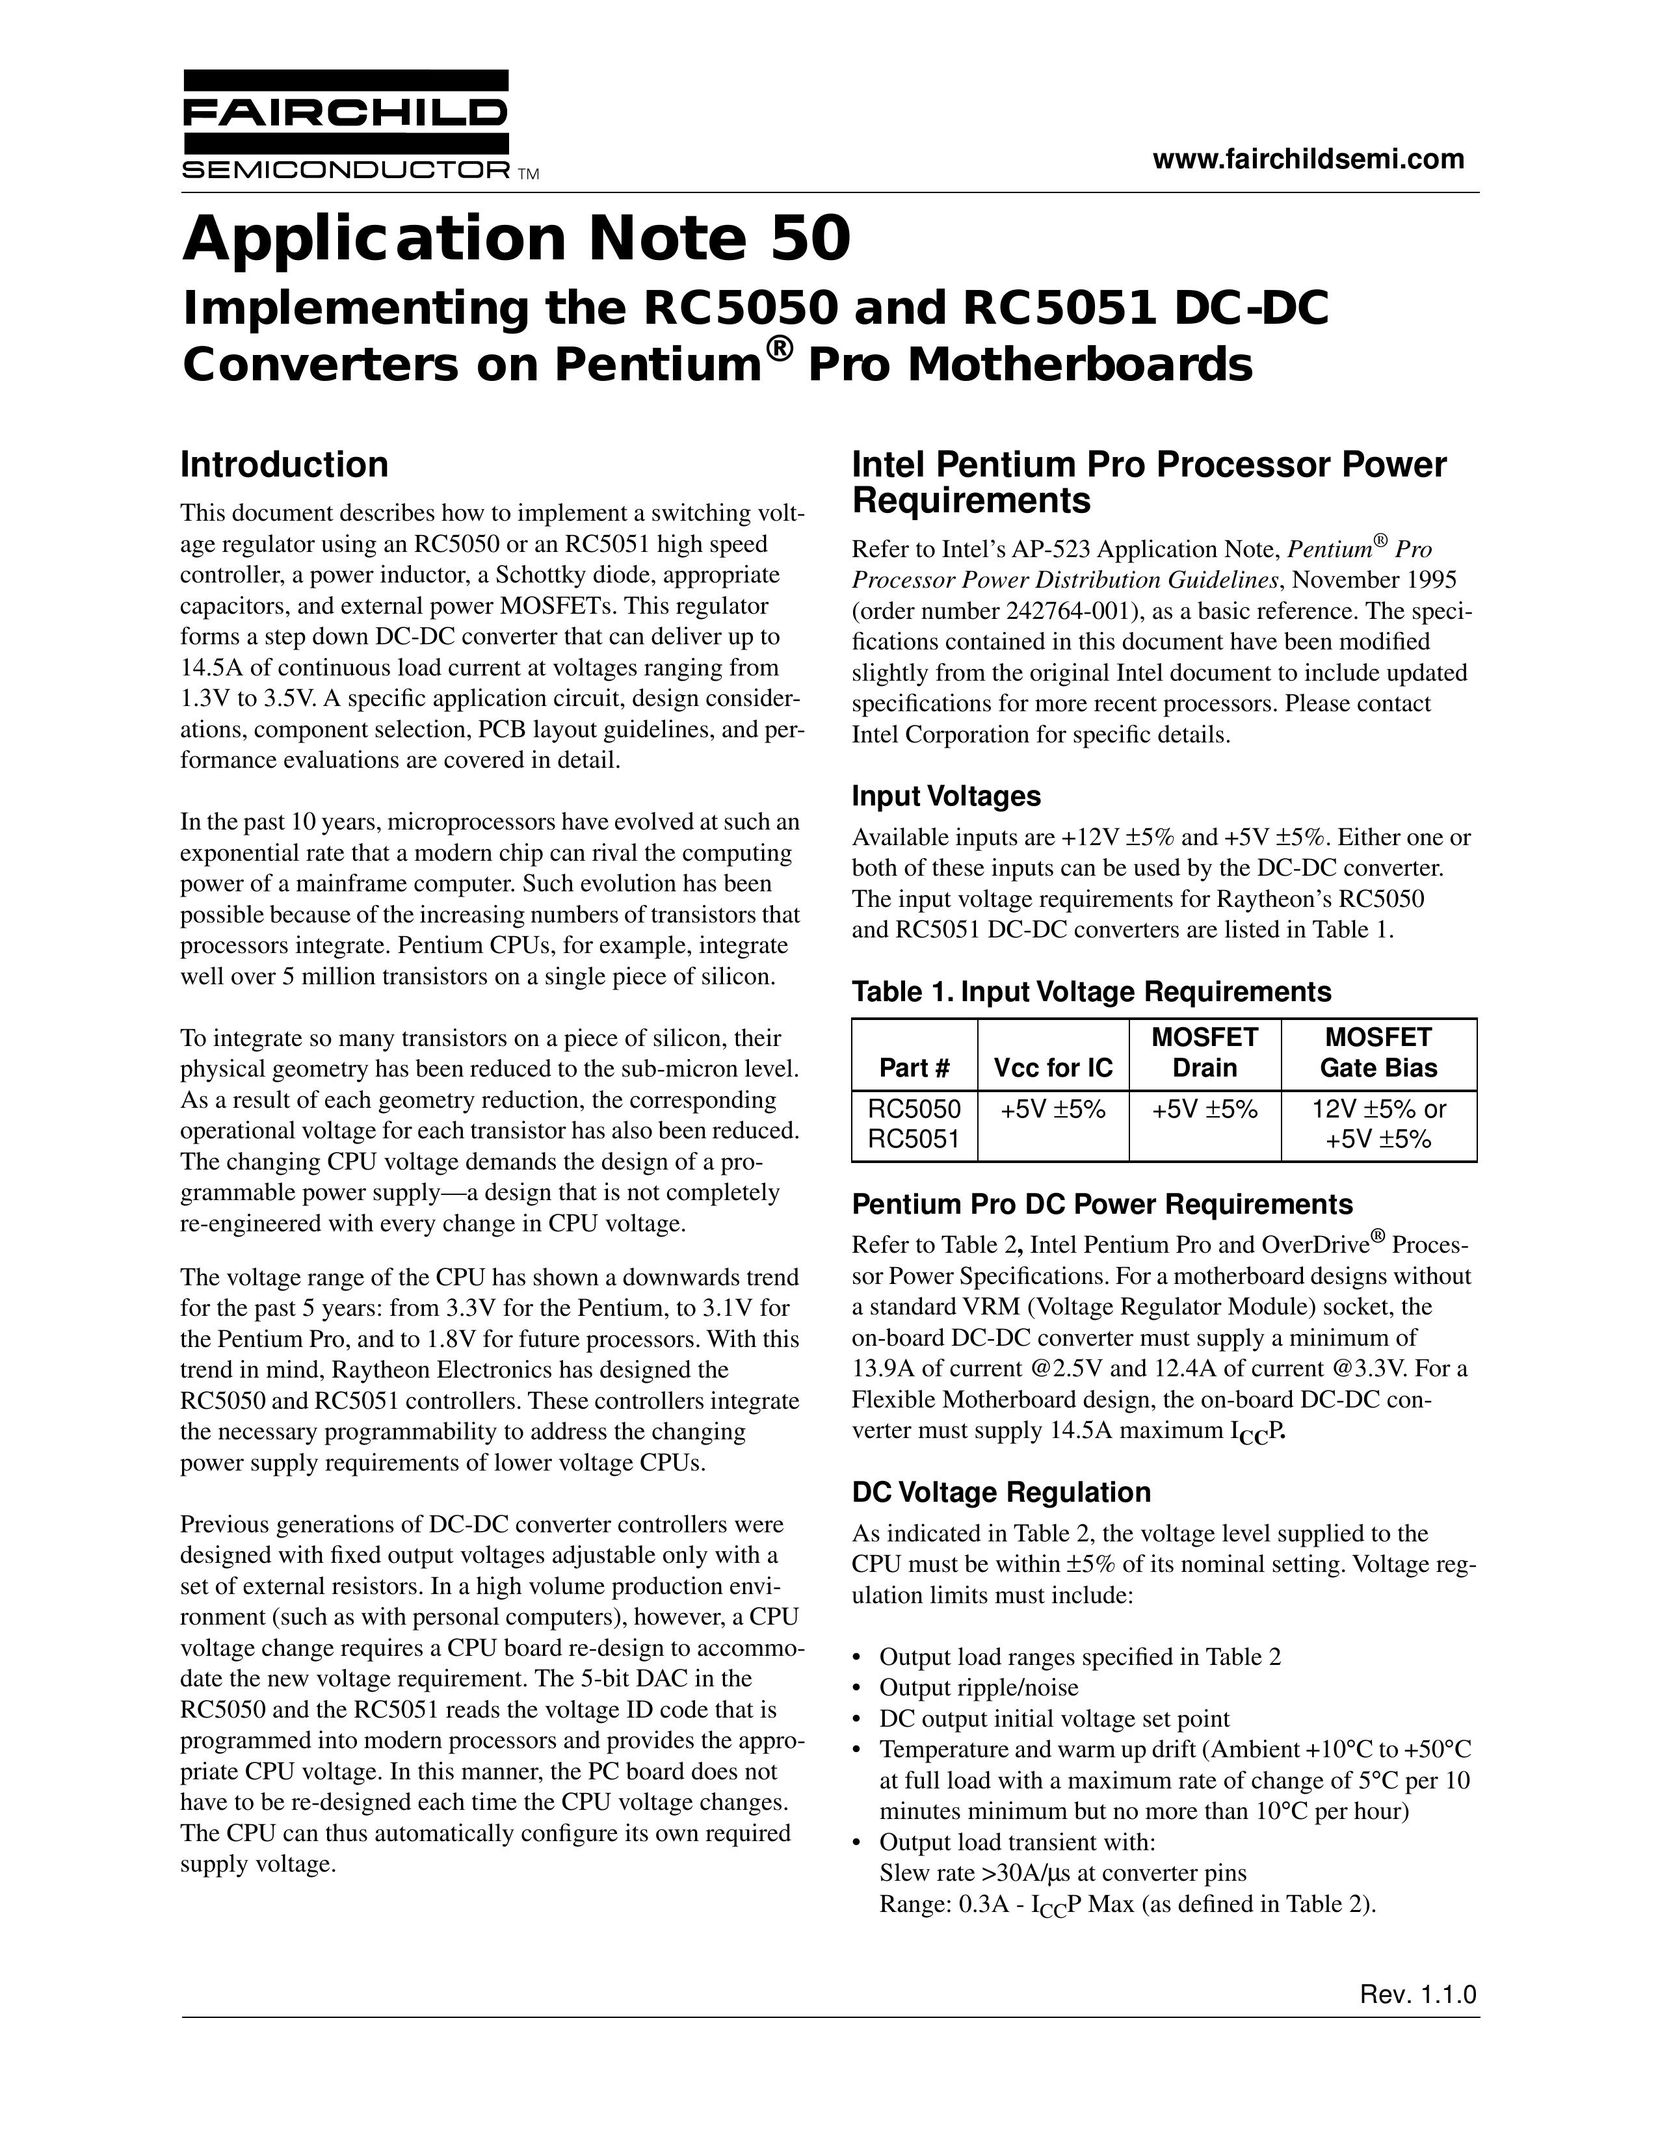 Fairchild RC5051 Computer Hardware User Manual